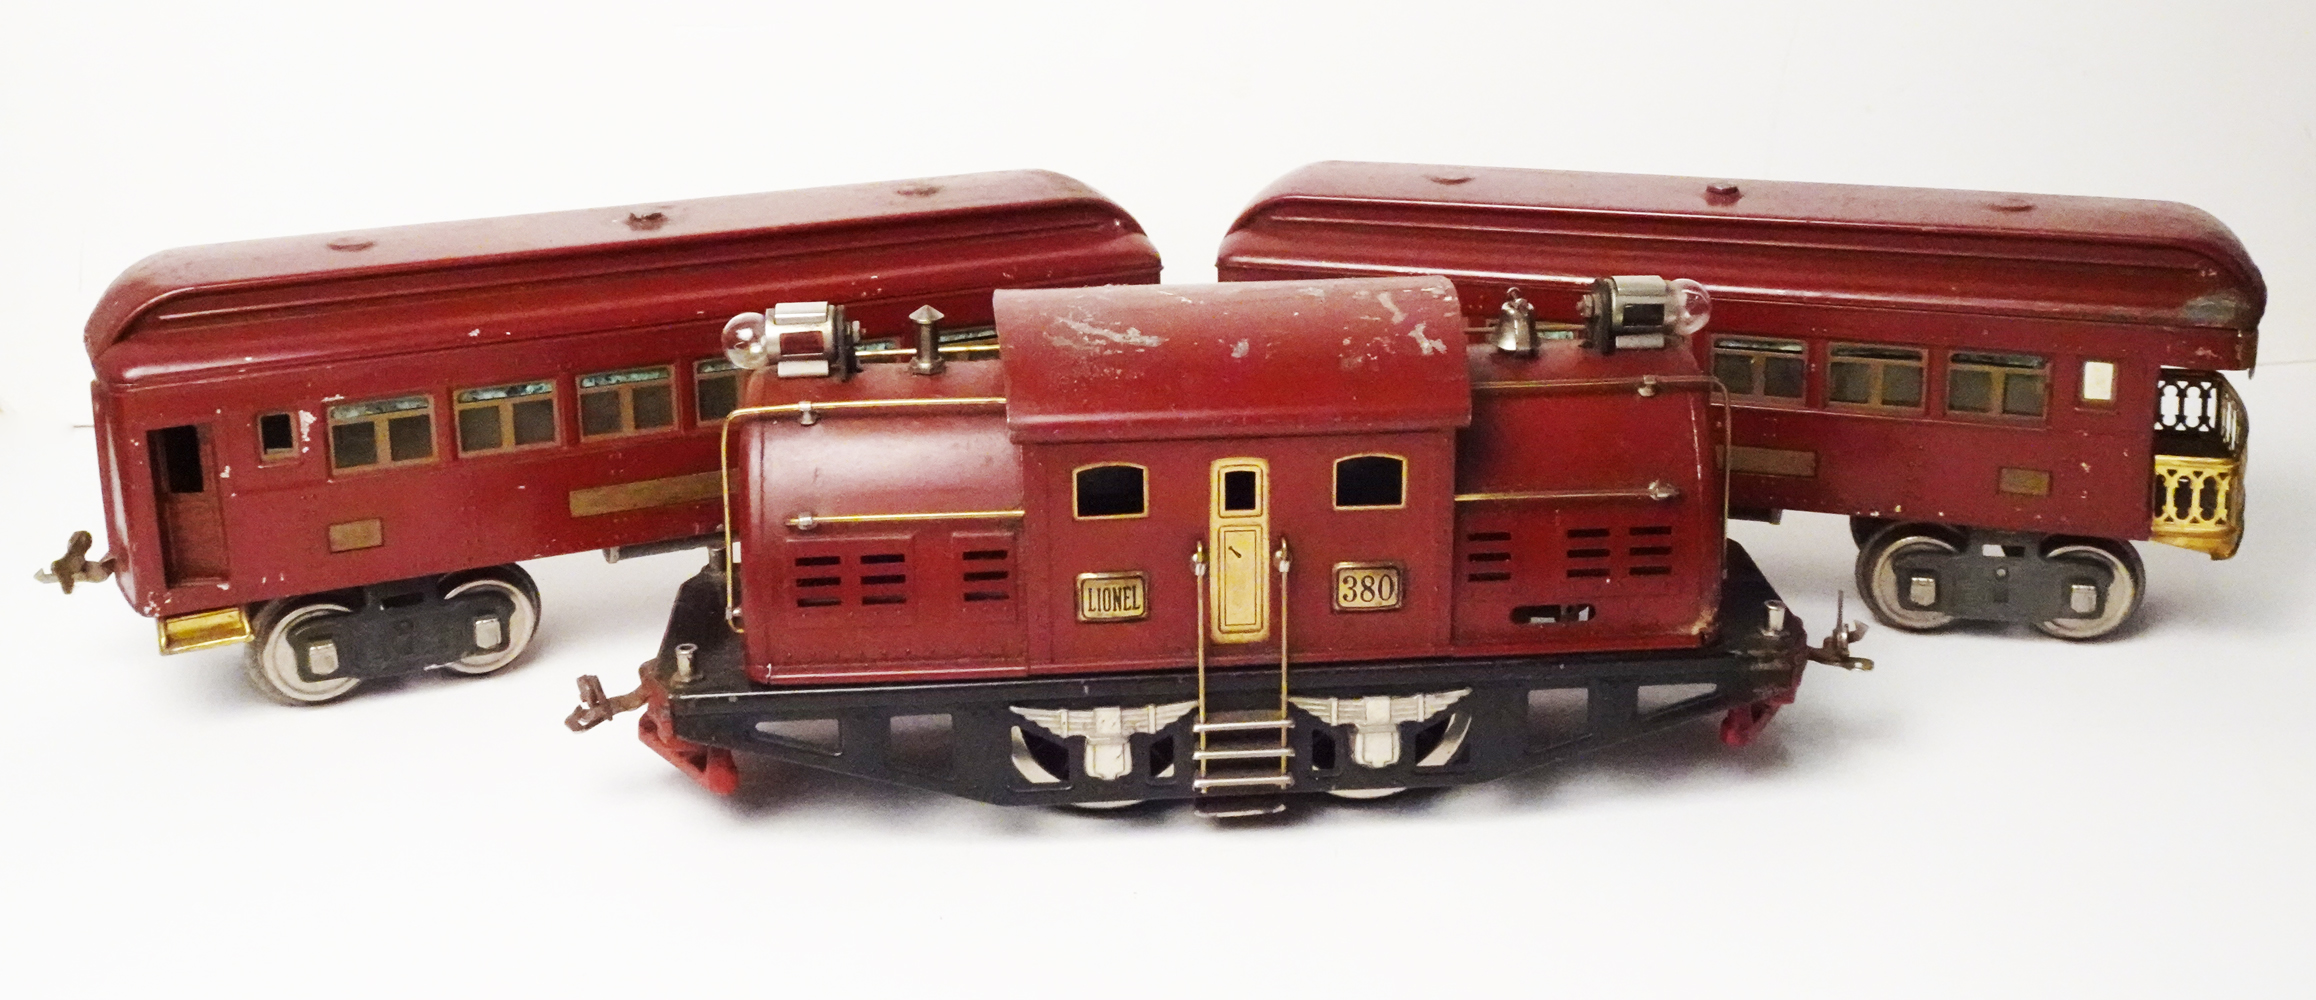 1920s Lionel standard-gauge passenger set. Engine paint appears original. VG condition overall. Est. $400-$800. Image courtesy of Stephenson’s Auction